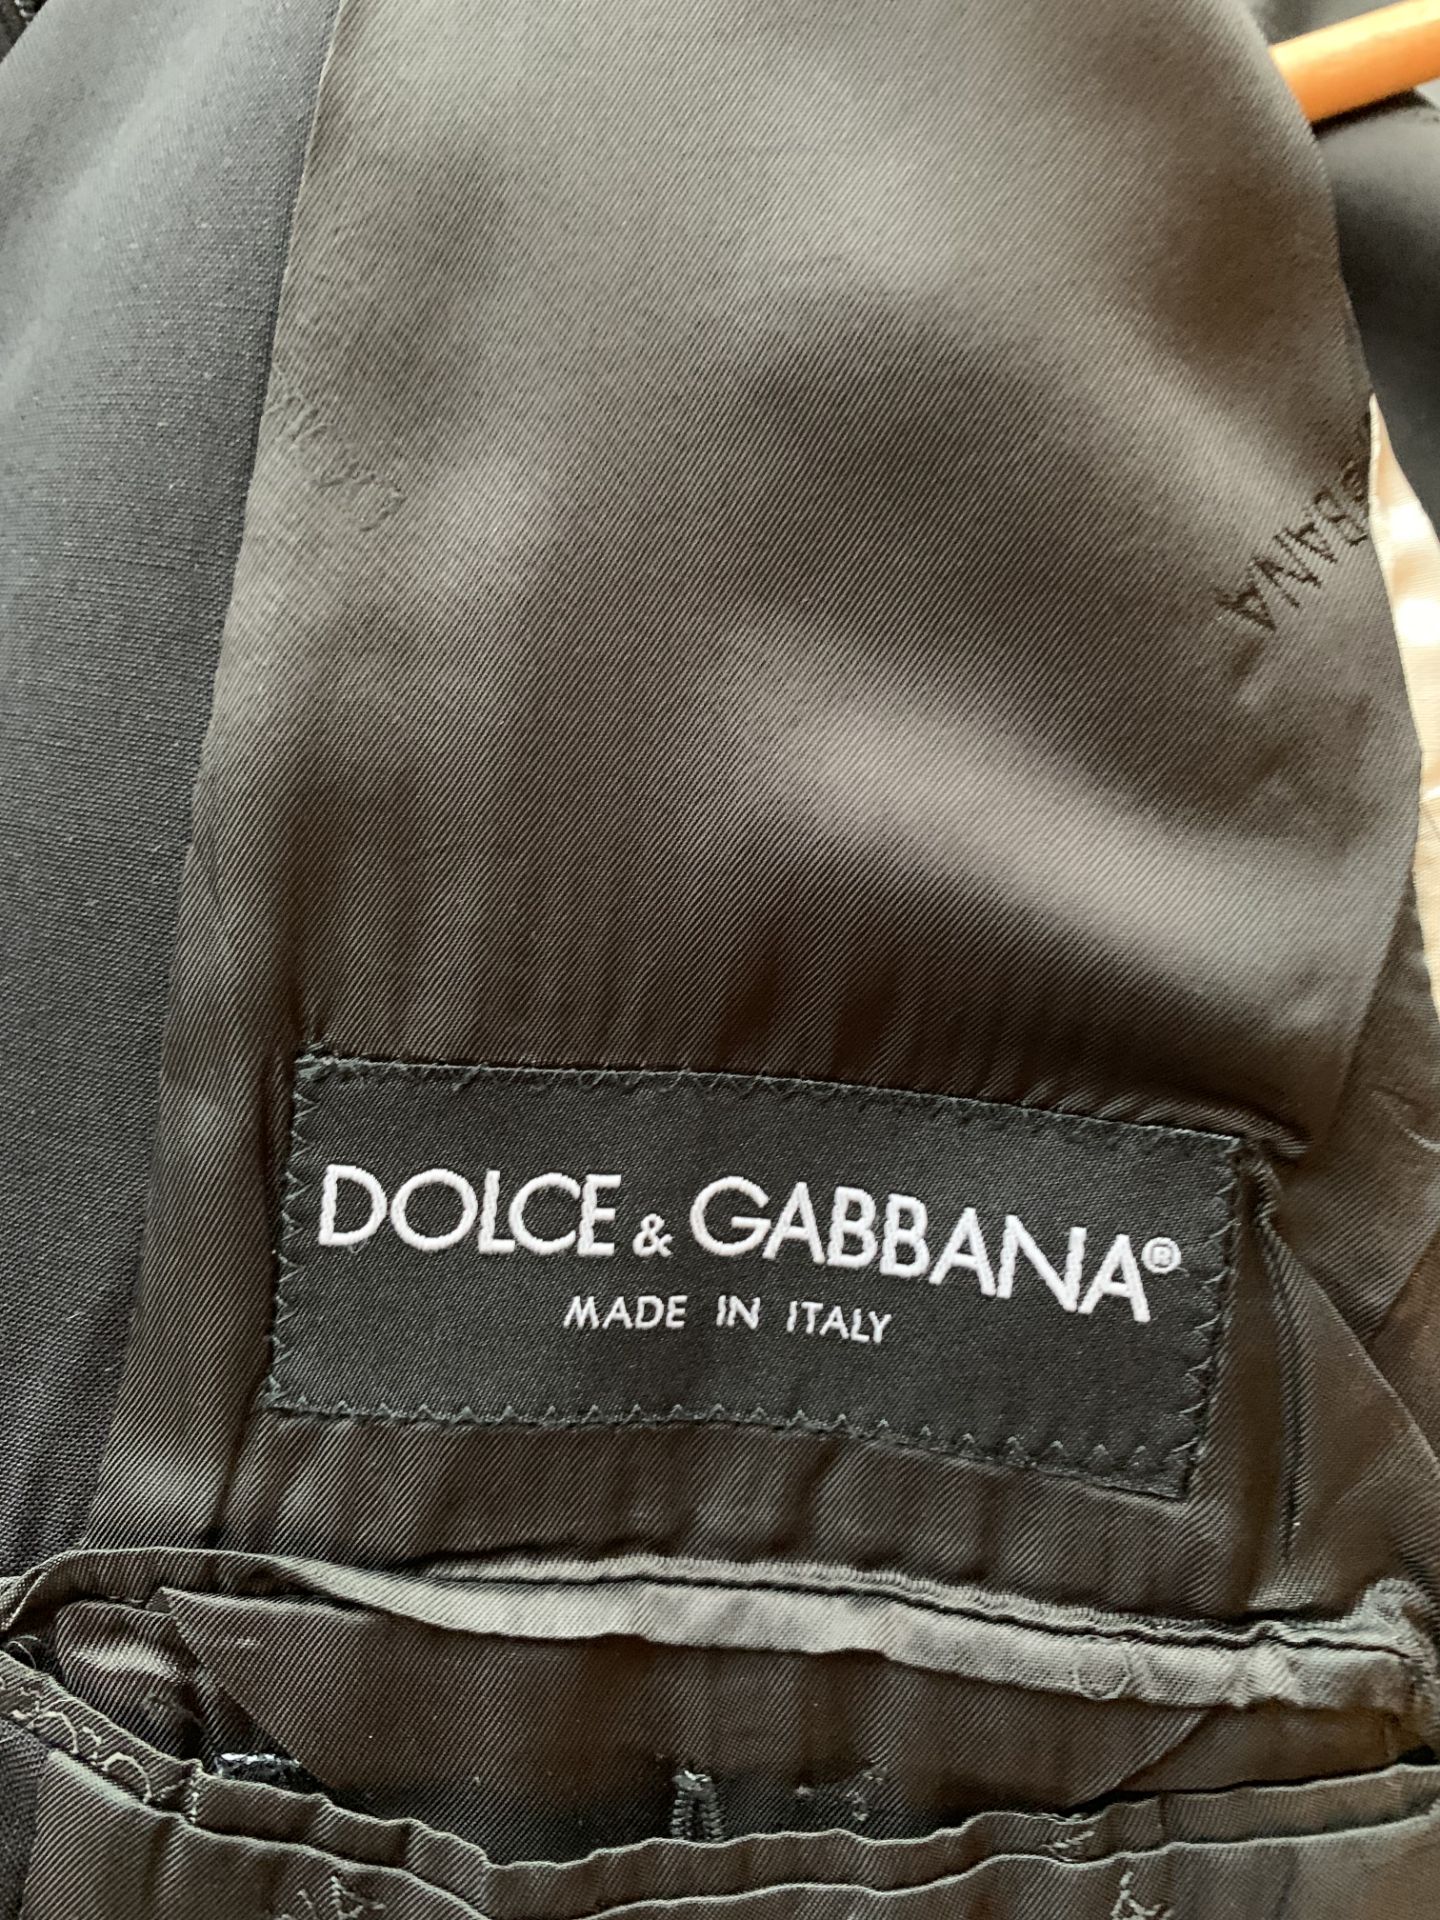 Vintage Dolce & Gabbana Blazer - Image 3 of 3